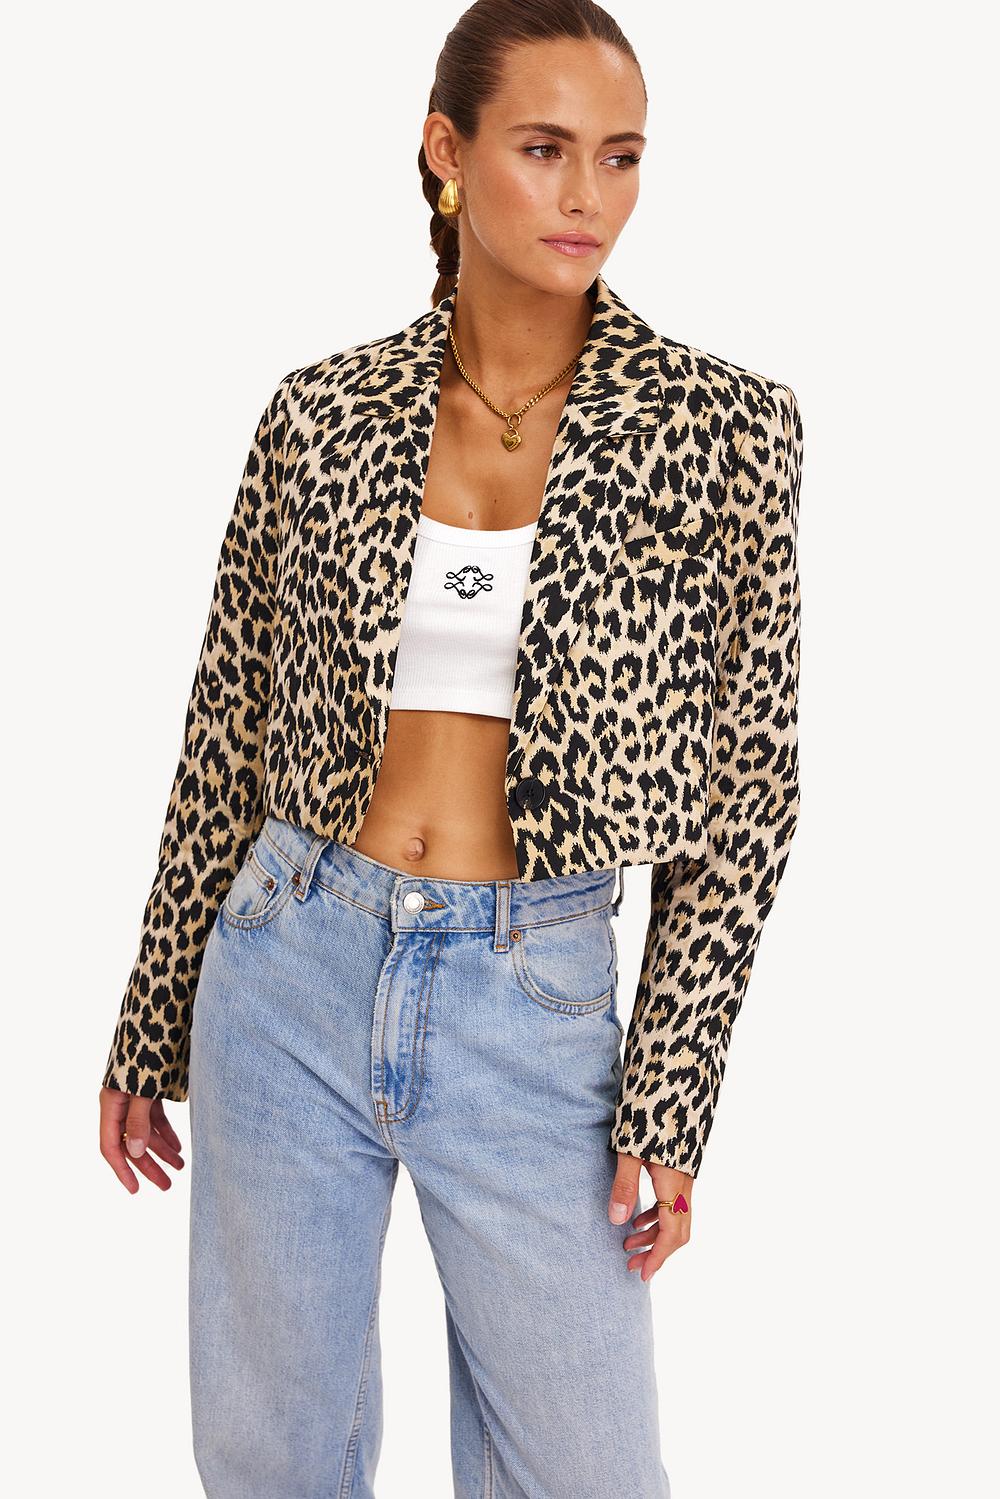 Brown blazer with leopard print